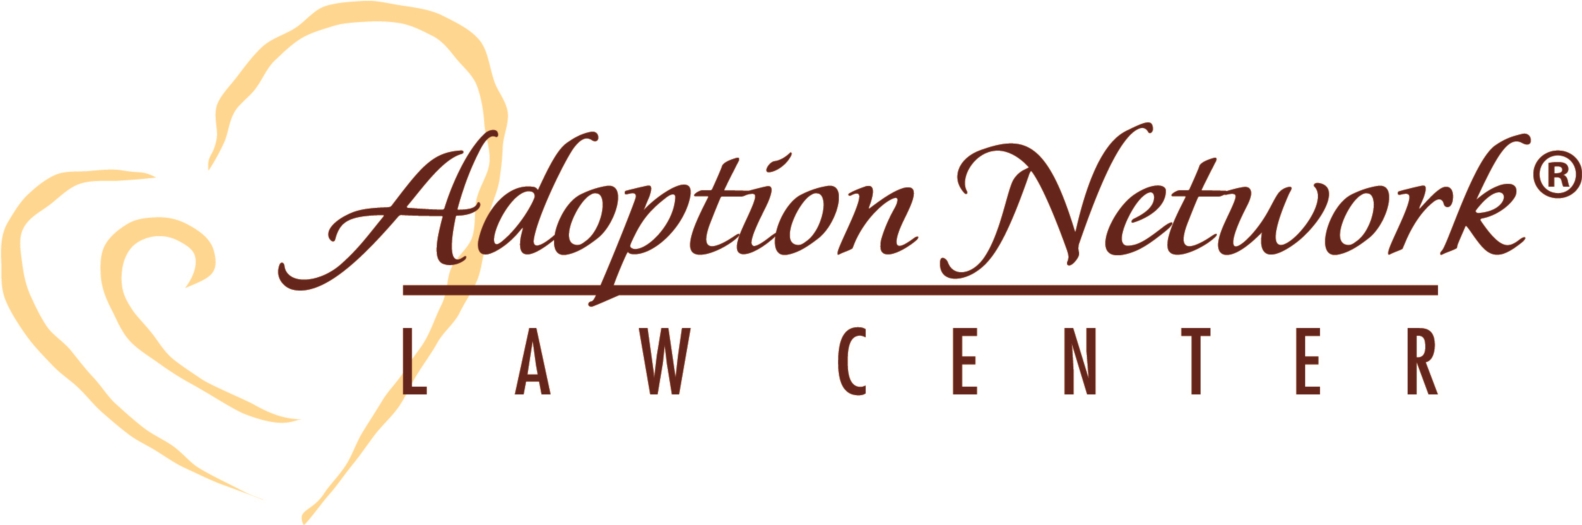 Adoption Network Law Center Company Logo